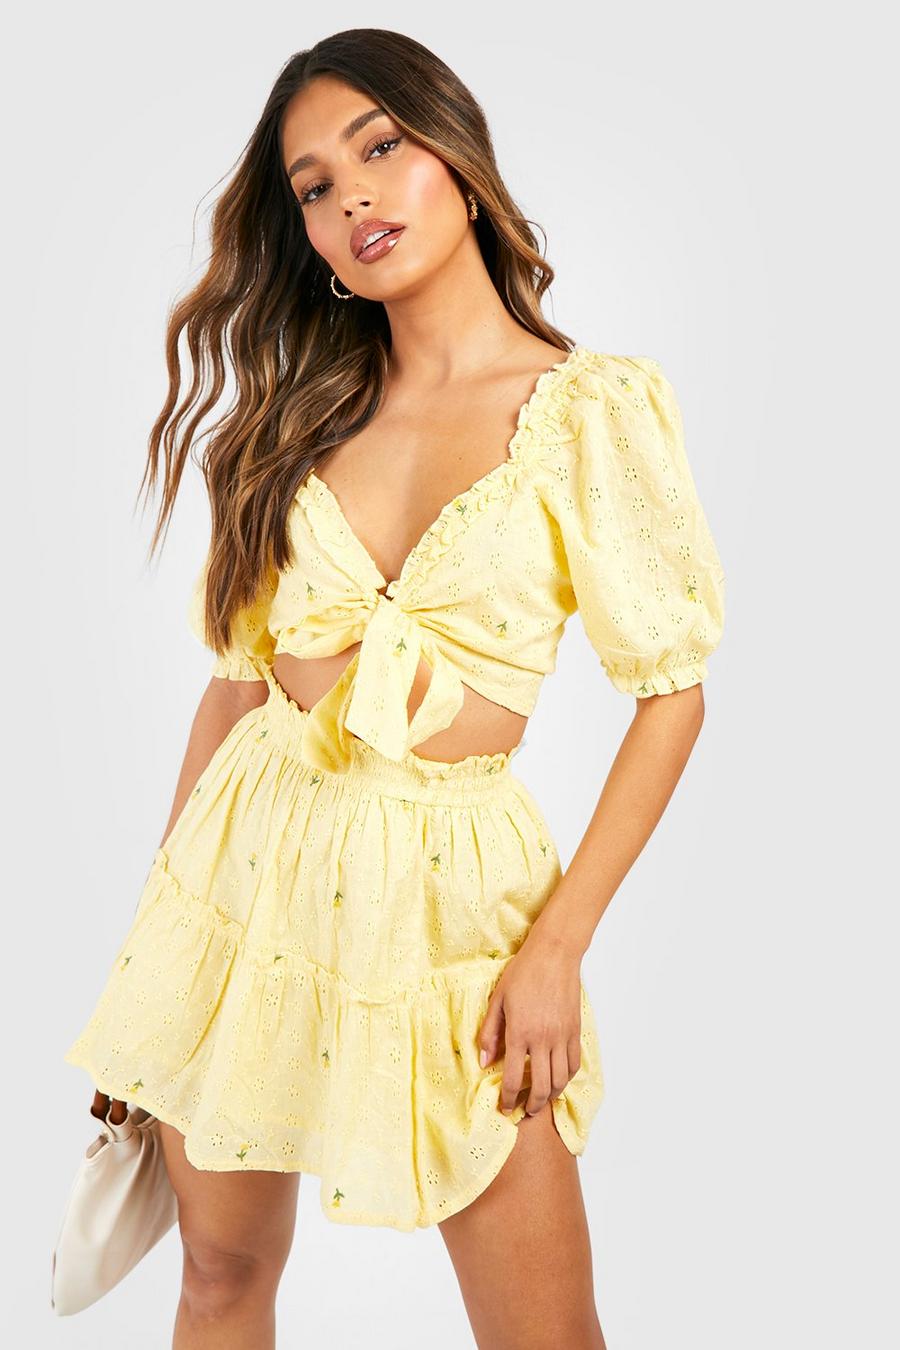 Lemon gul Blommig topp och kjol med volanger